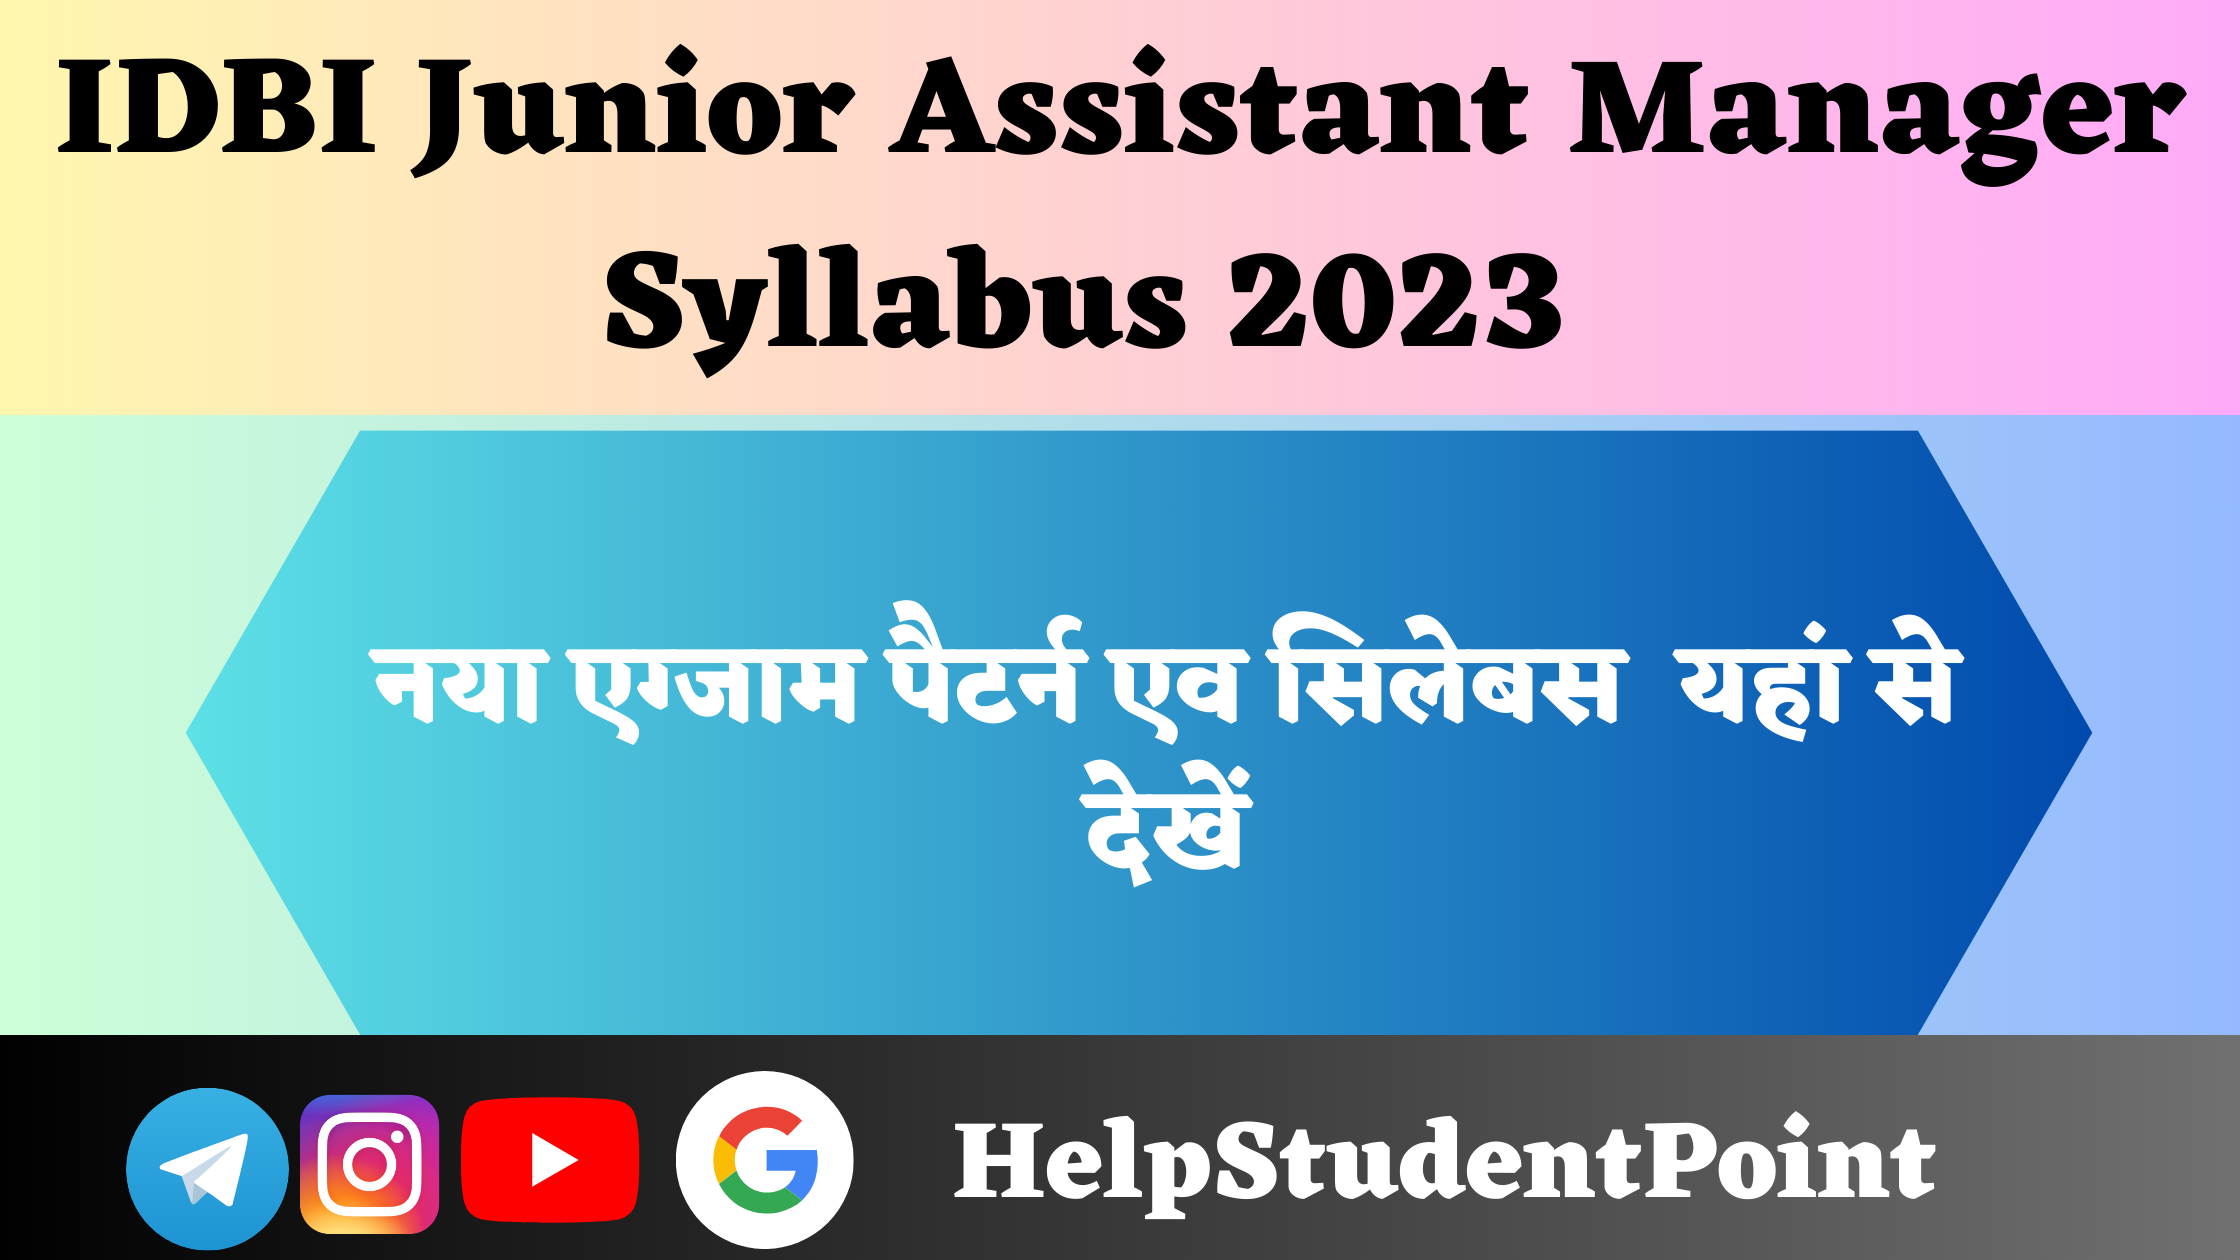 IDBI Junior Assistant Manager Syllabus 2023